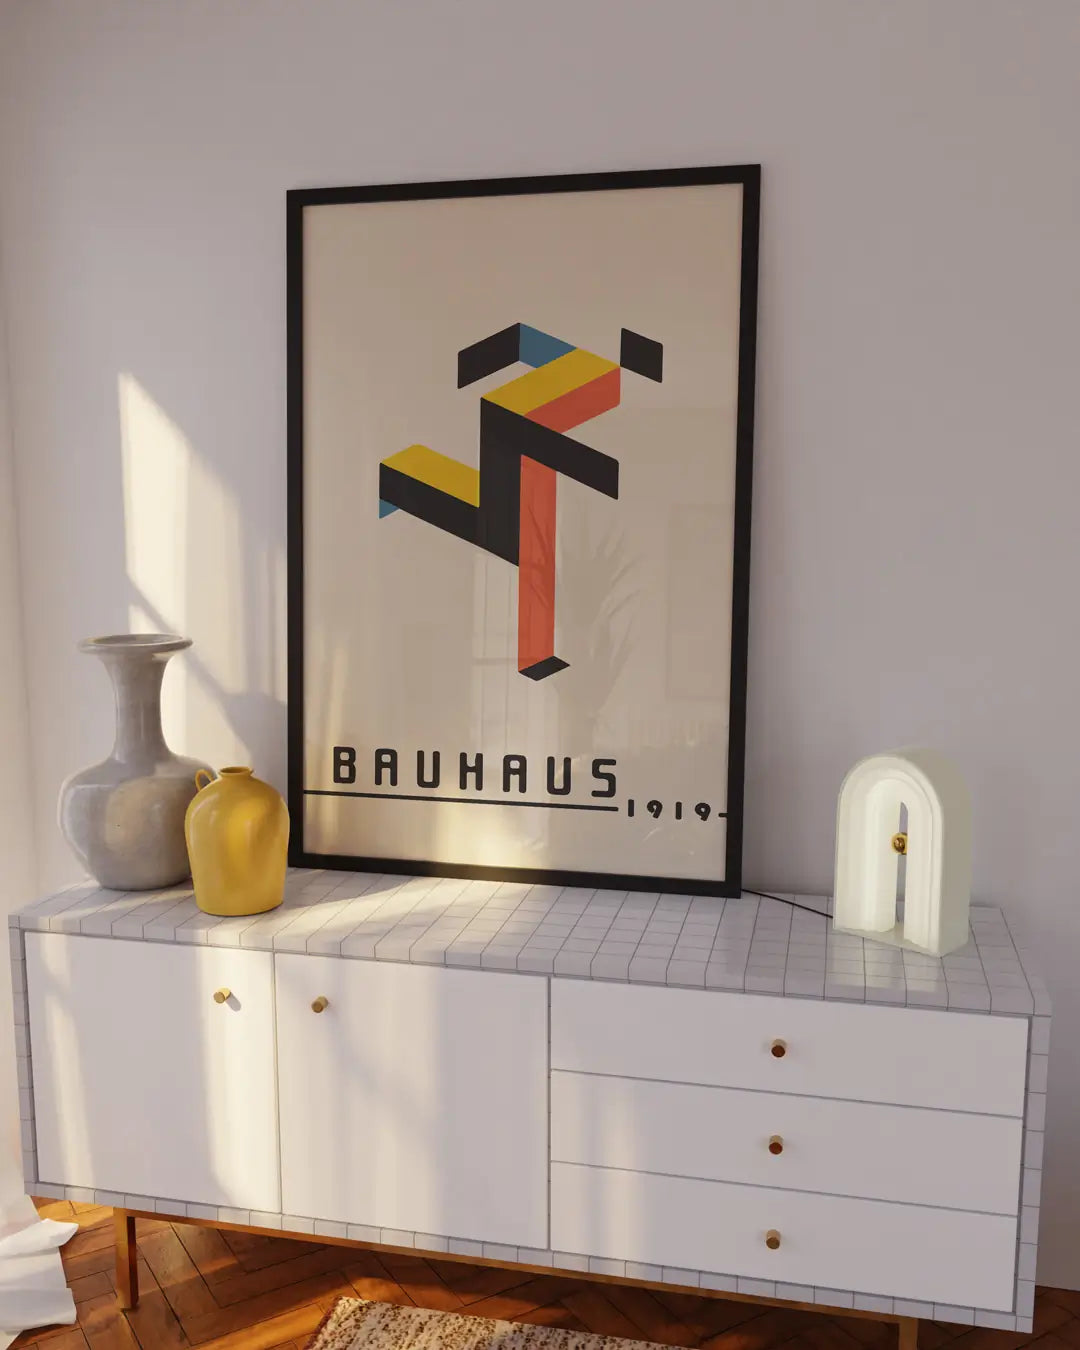 Running Bauhaus – Official Bauhaus Japan